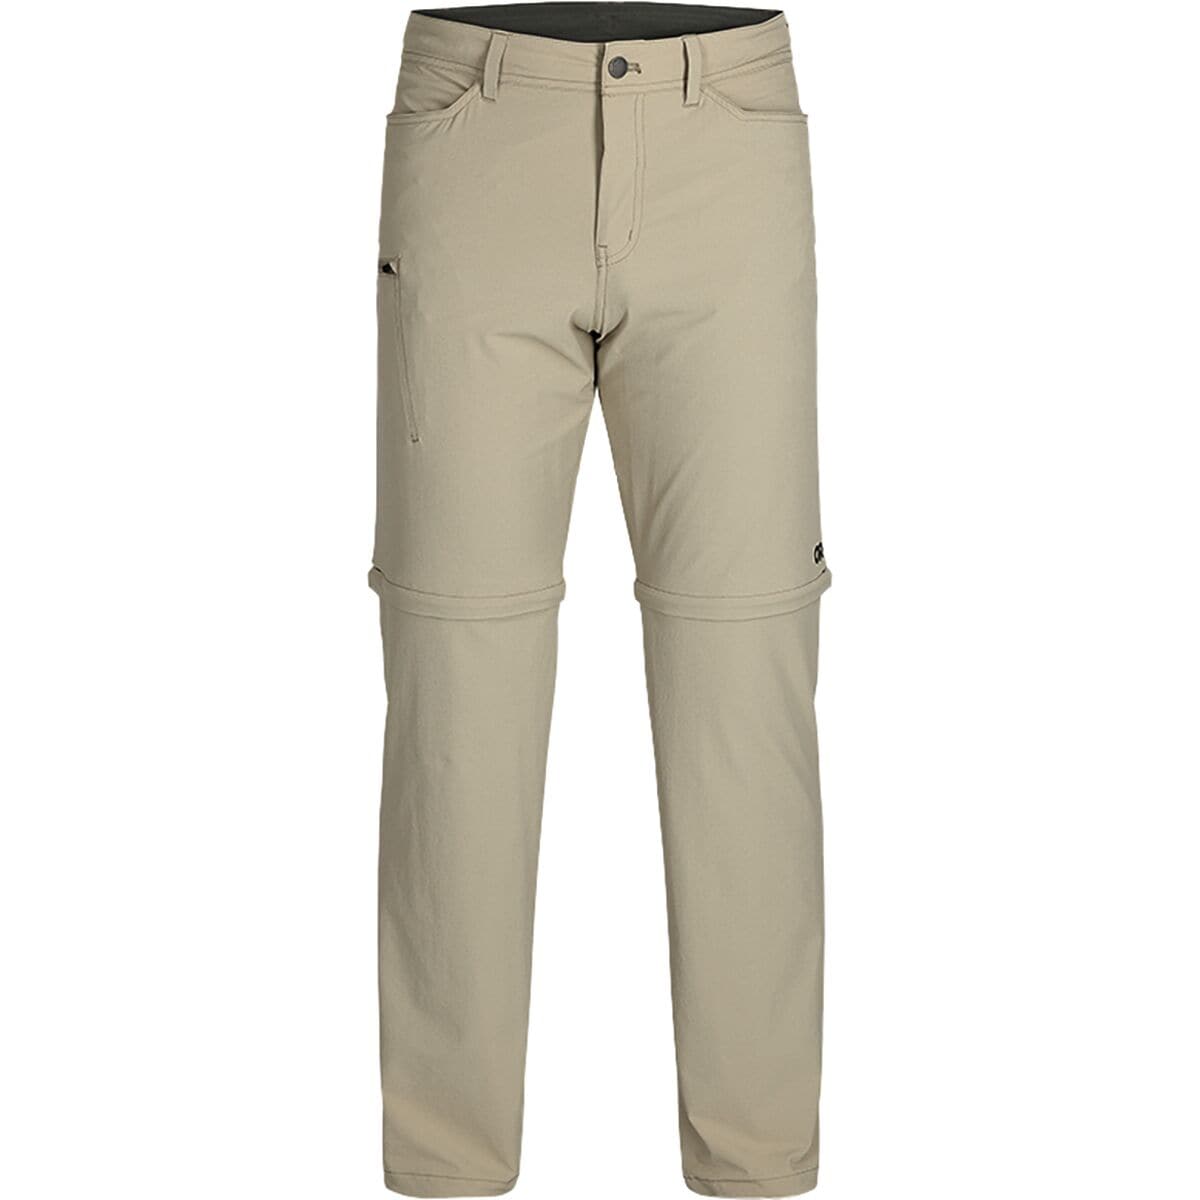 Outdoor Research Ferrosi Convertible Pant - Men's | eBay